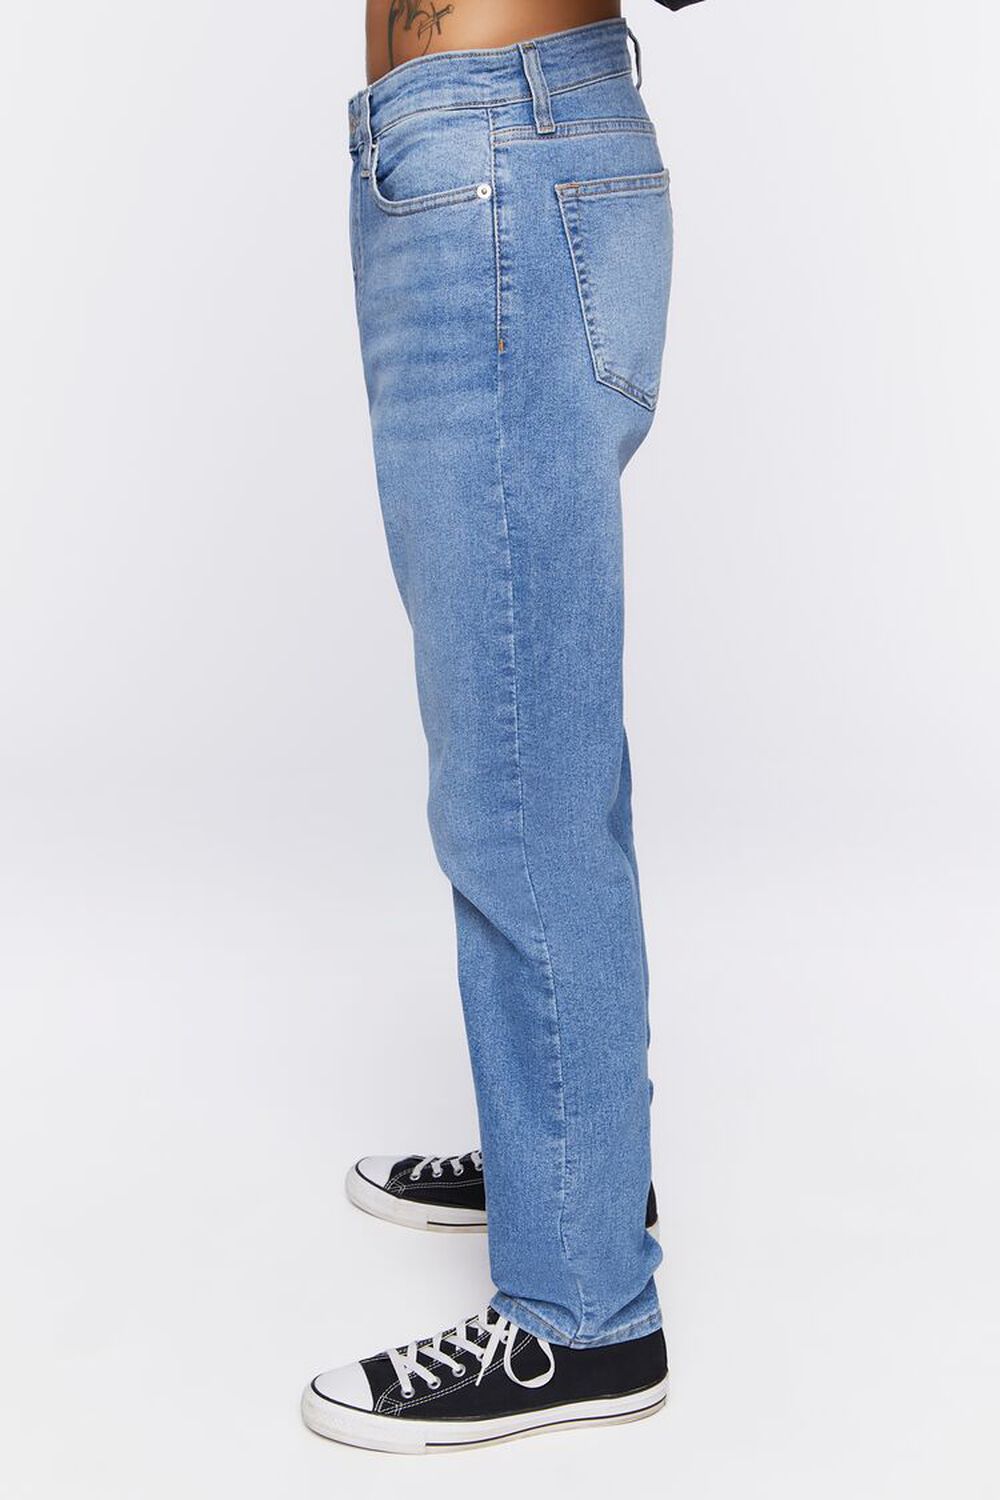 MEDIUM DENIM Slim-Fit Whiskered Jeans, image 3